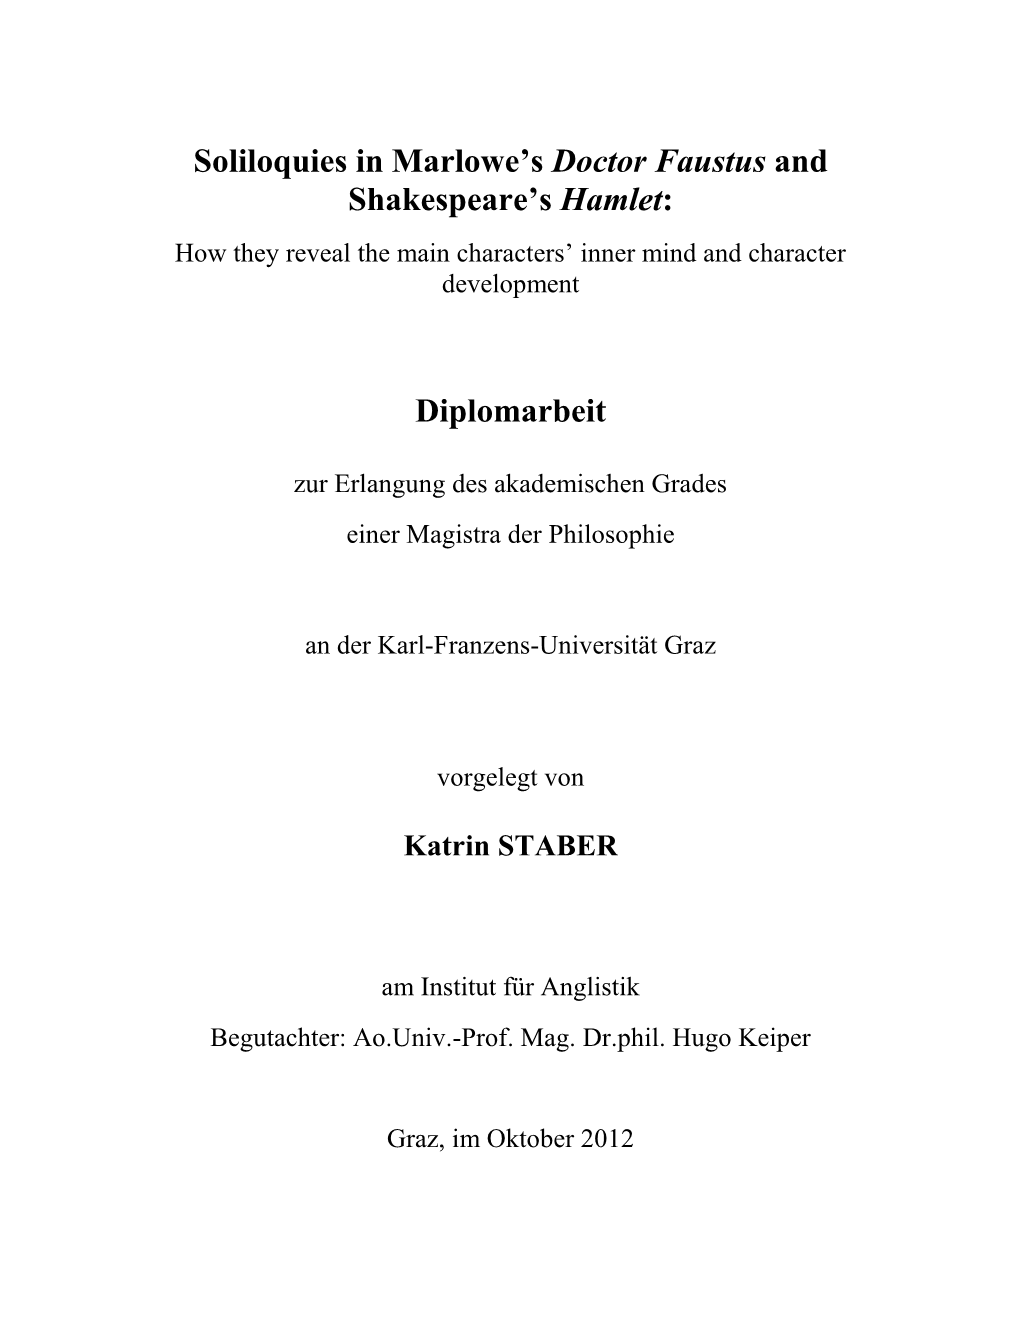 Soliloquies in Marlowe's Doctor Faustus and Shakespeare's Hamlet